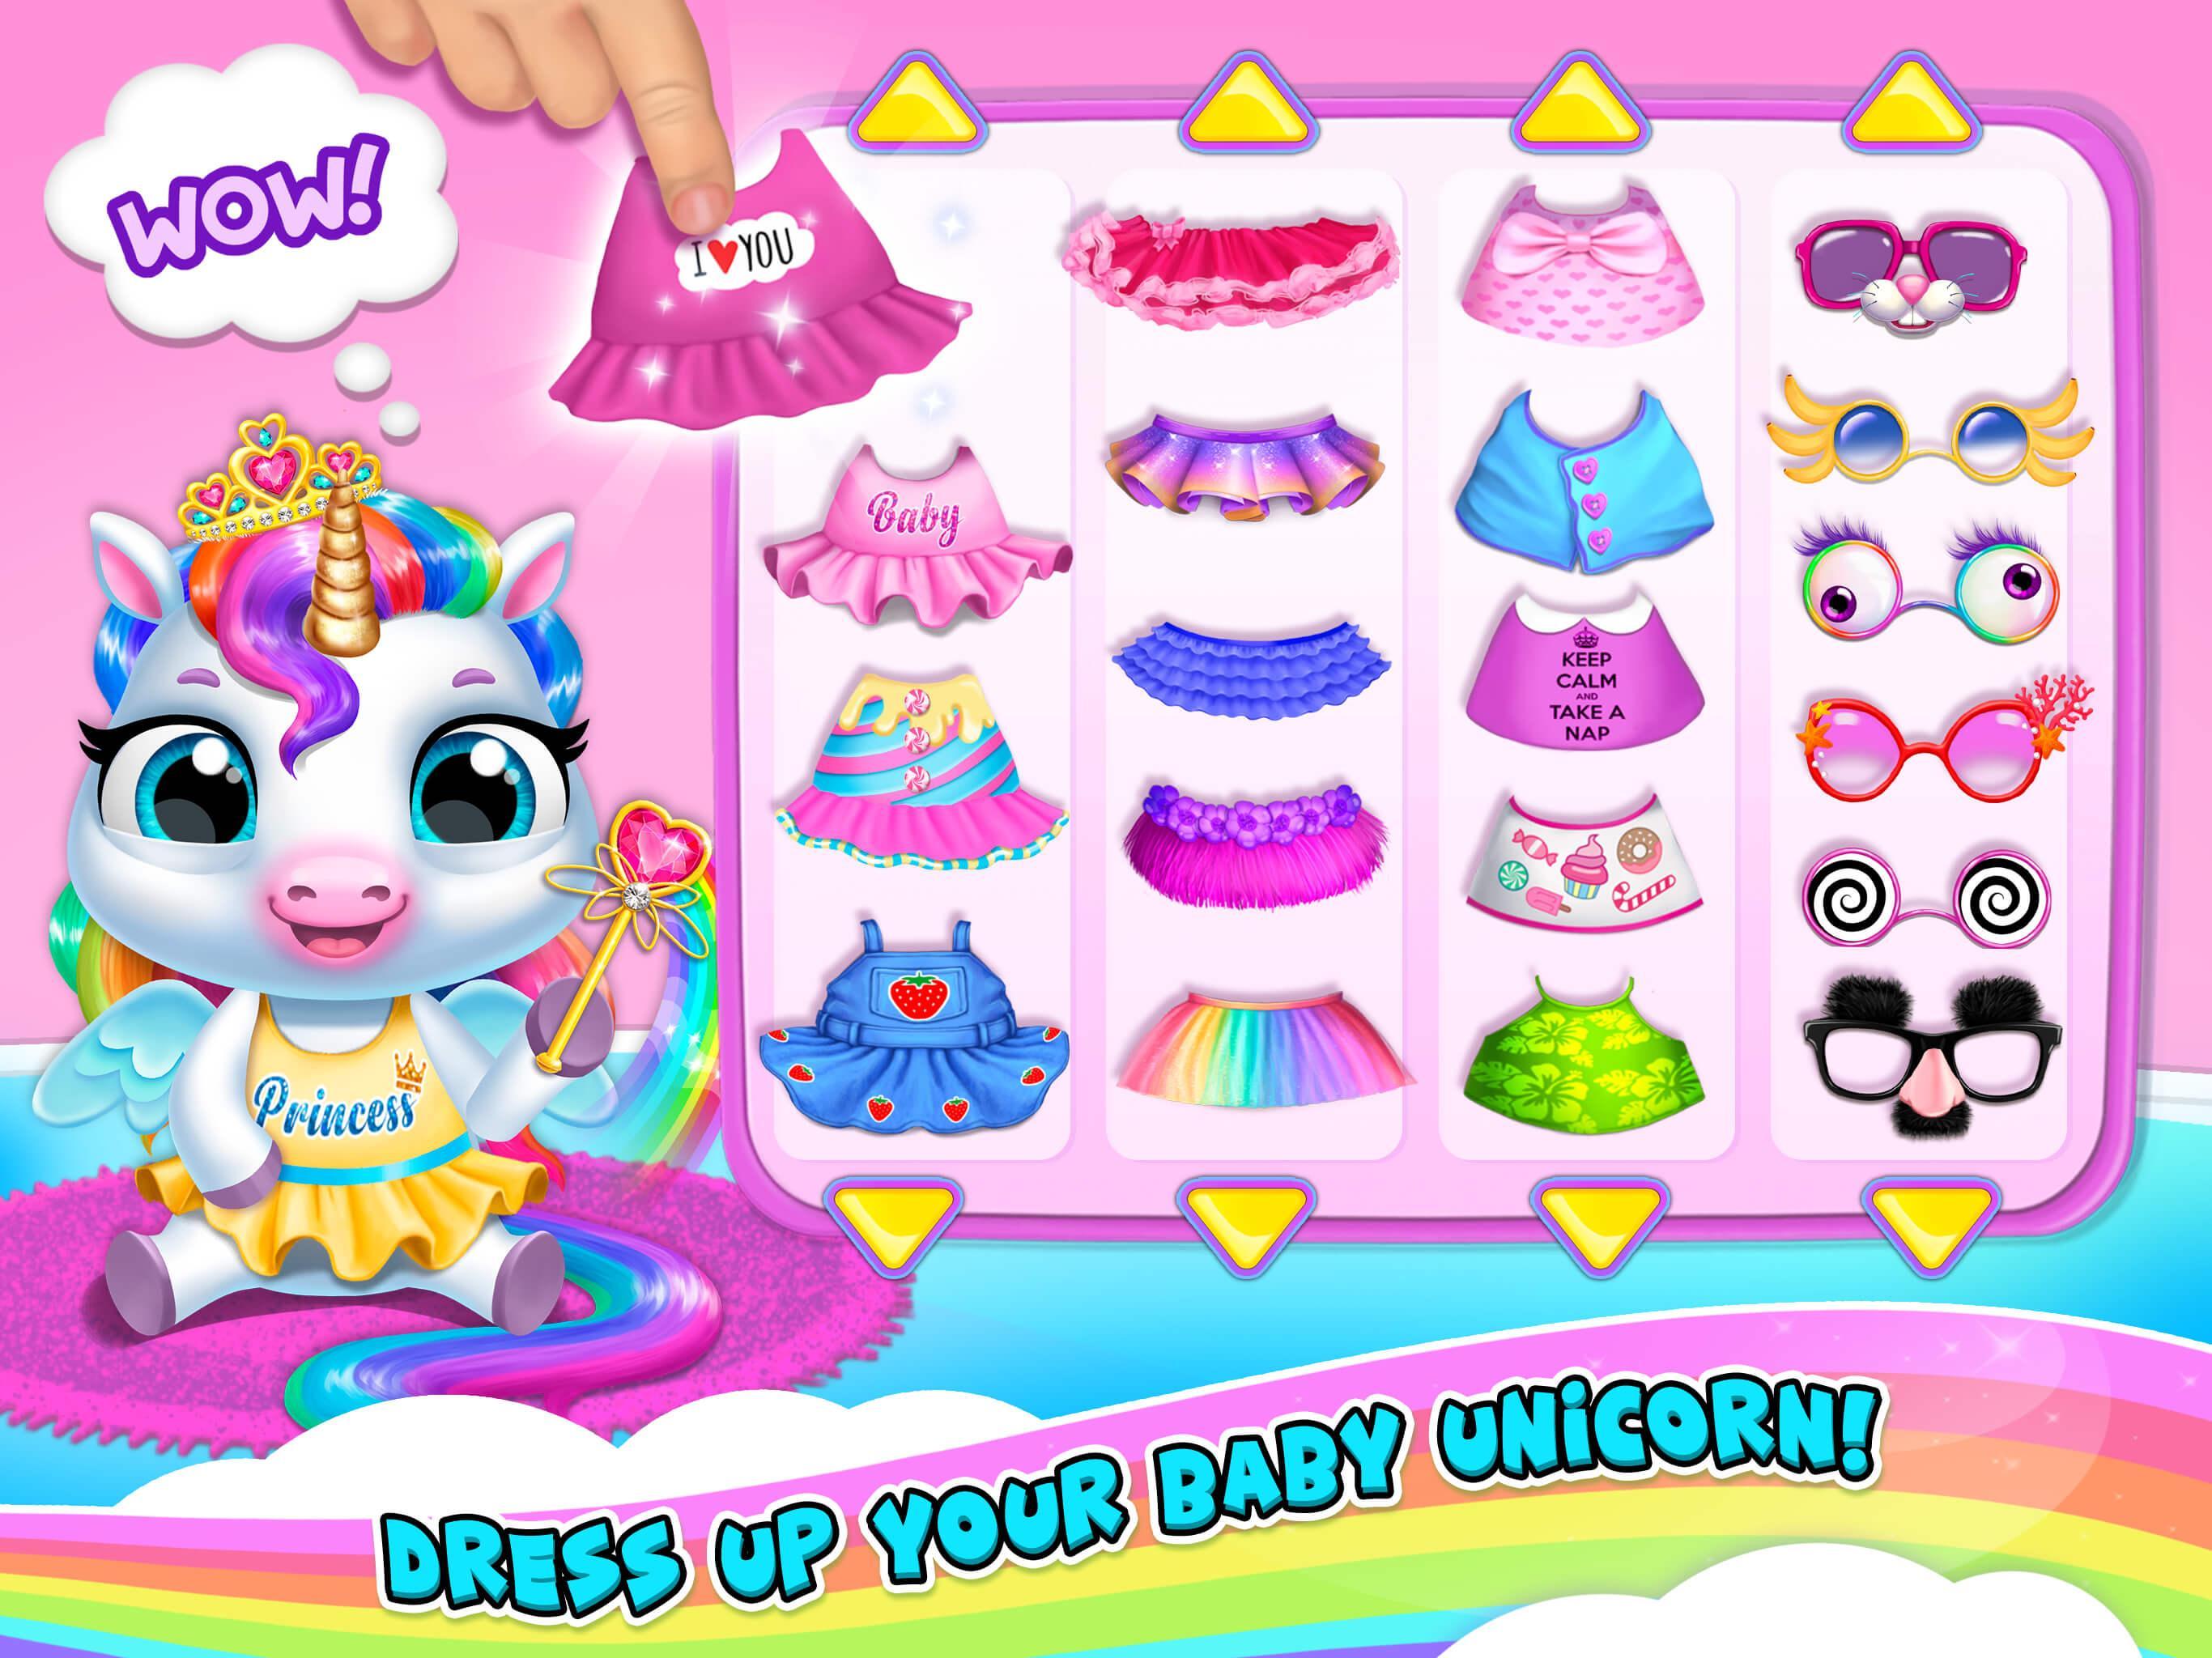 My Baby Unicorn 2 - New Virtual Pony Pet 1.0.49 Screenshot 11